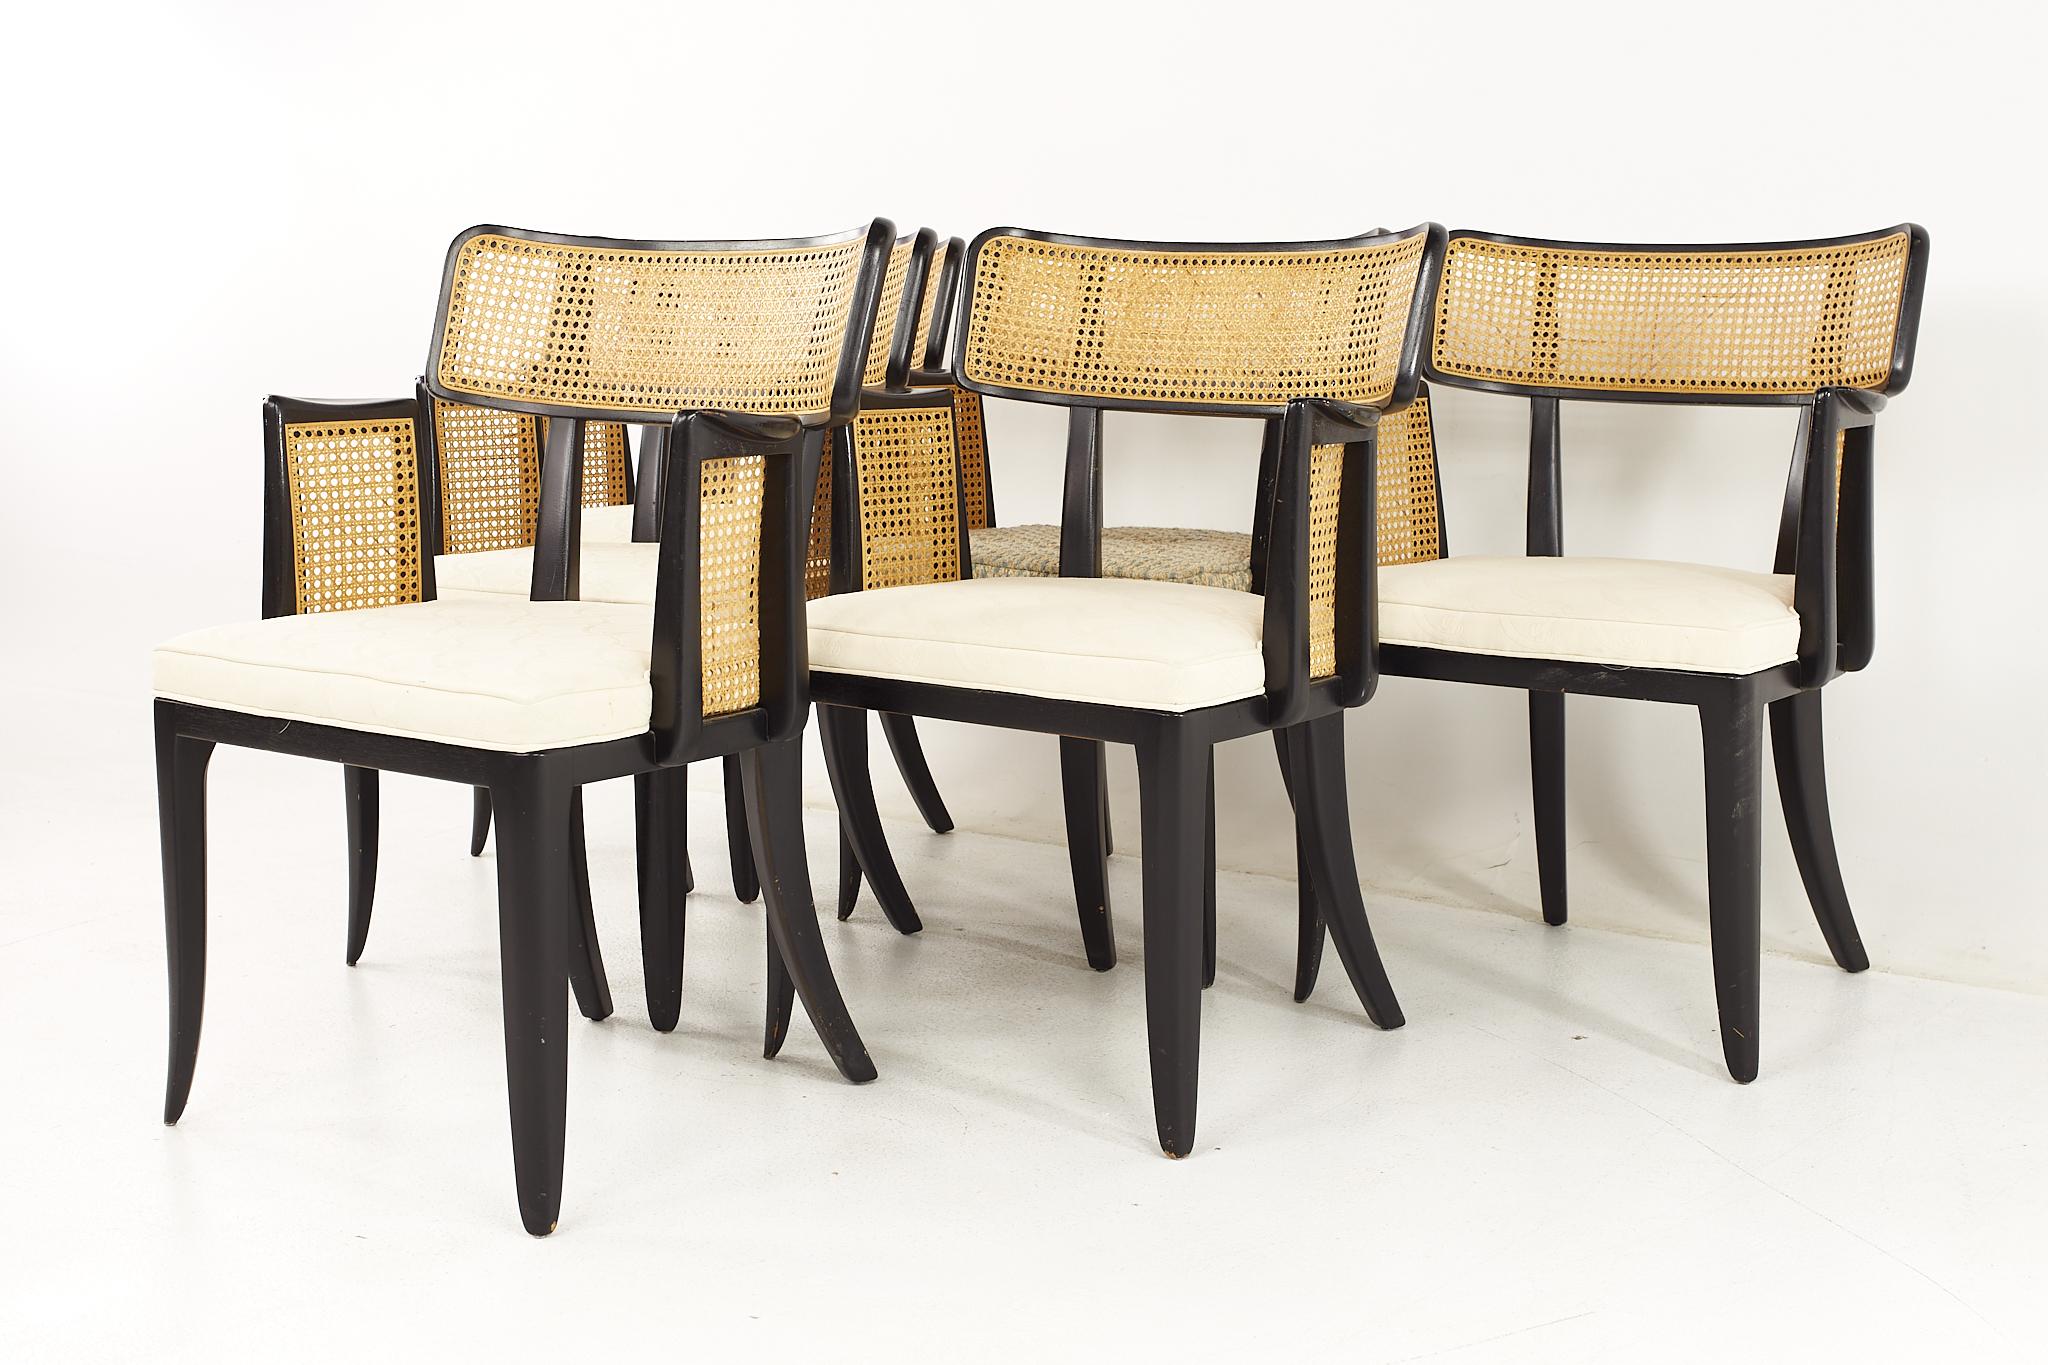 Mid-Century Modern Edward Wormley for Dunbar Mid Century Dining Chairs – Set of 6